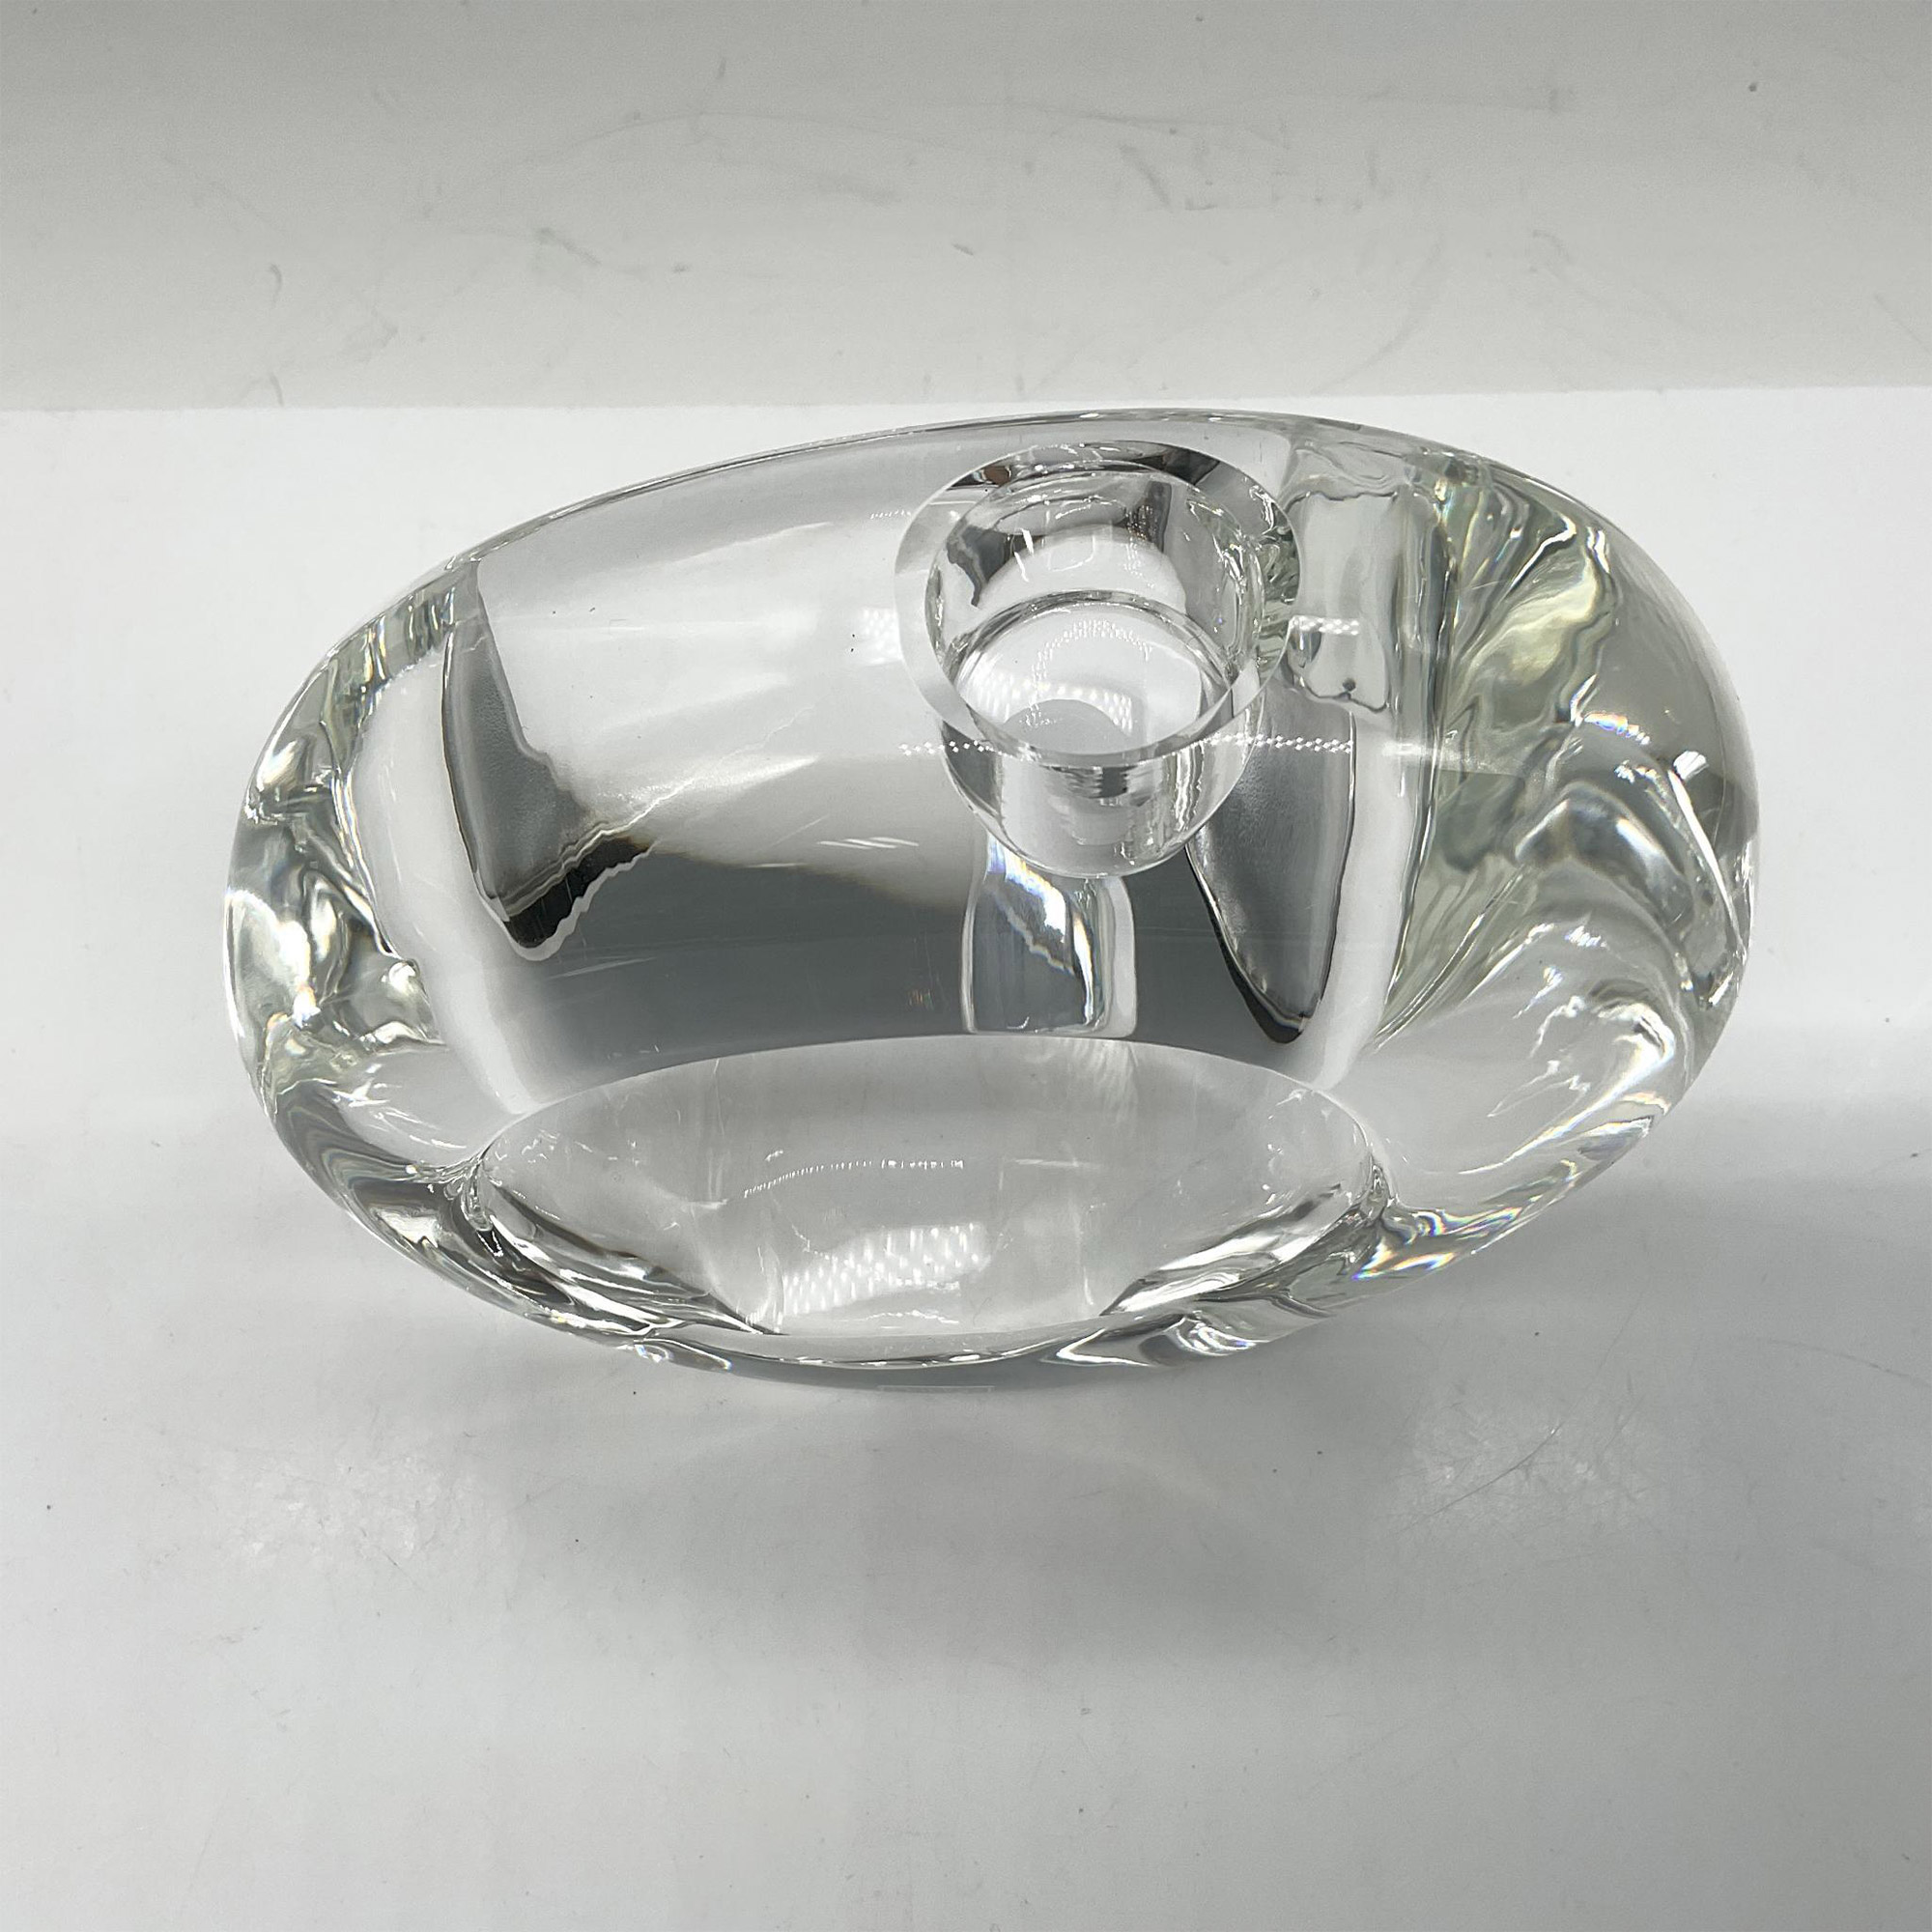 Orrefors Crystal Oval Candle Holder - Image 3 of 5